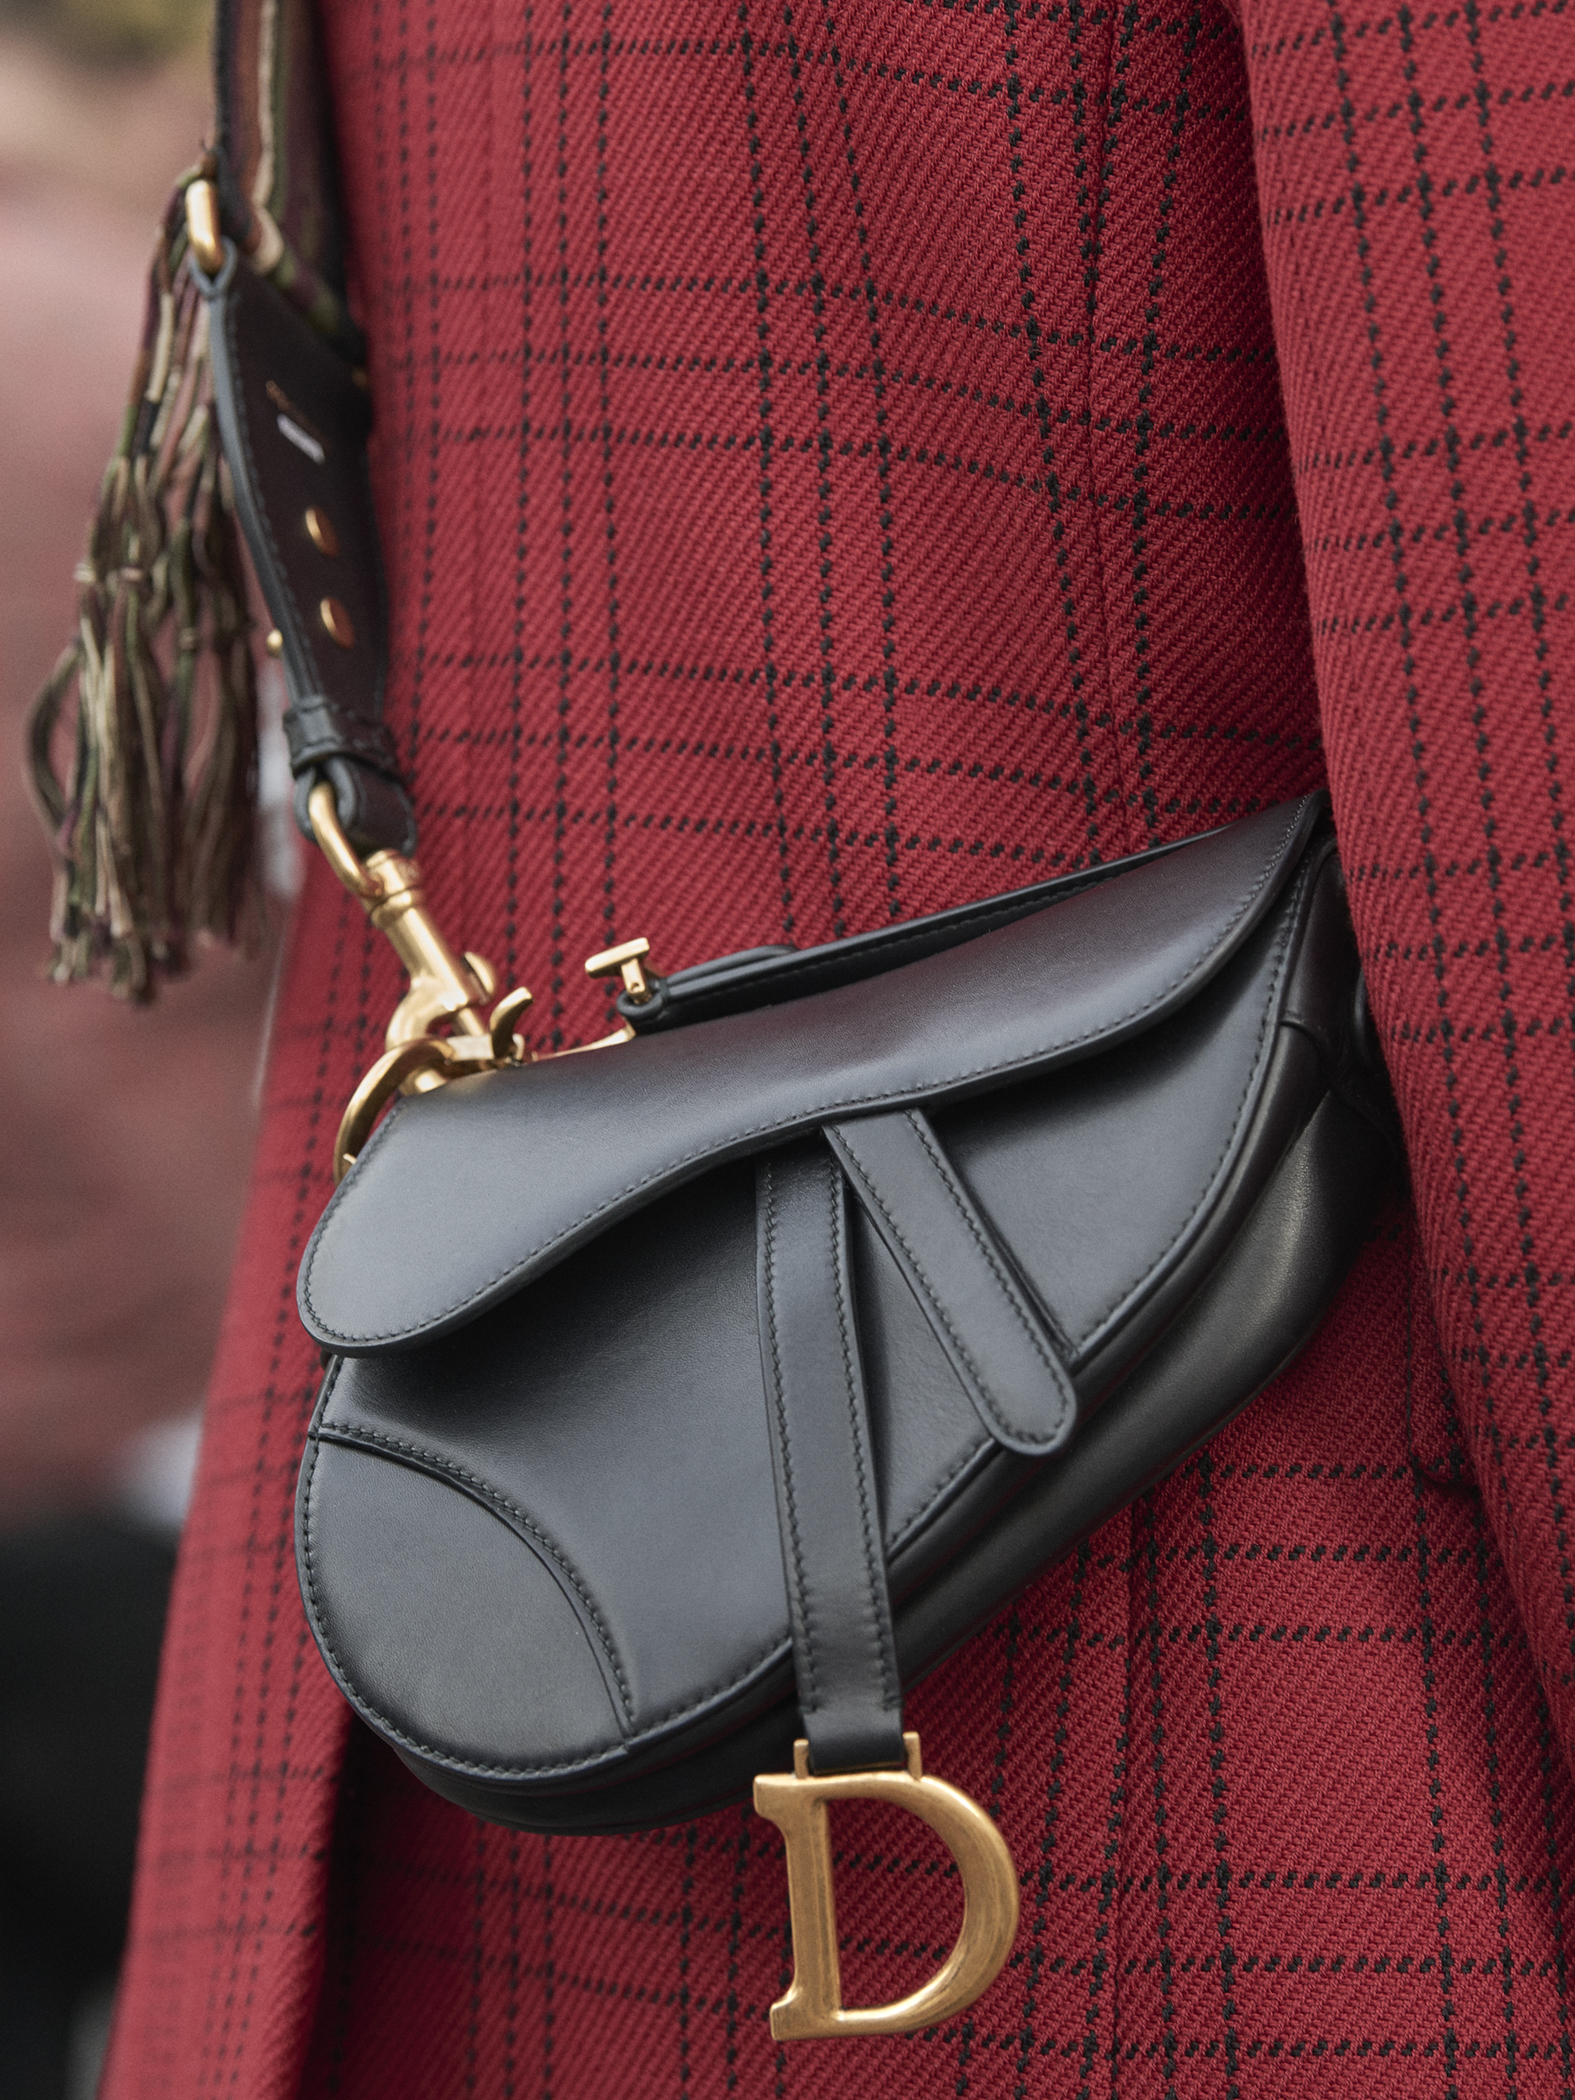 Dress Coat and Dior Saddle Medium Bag #diorss19 #diorsaddlebag